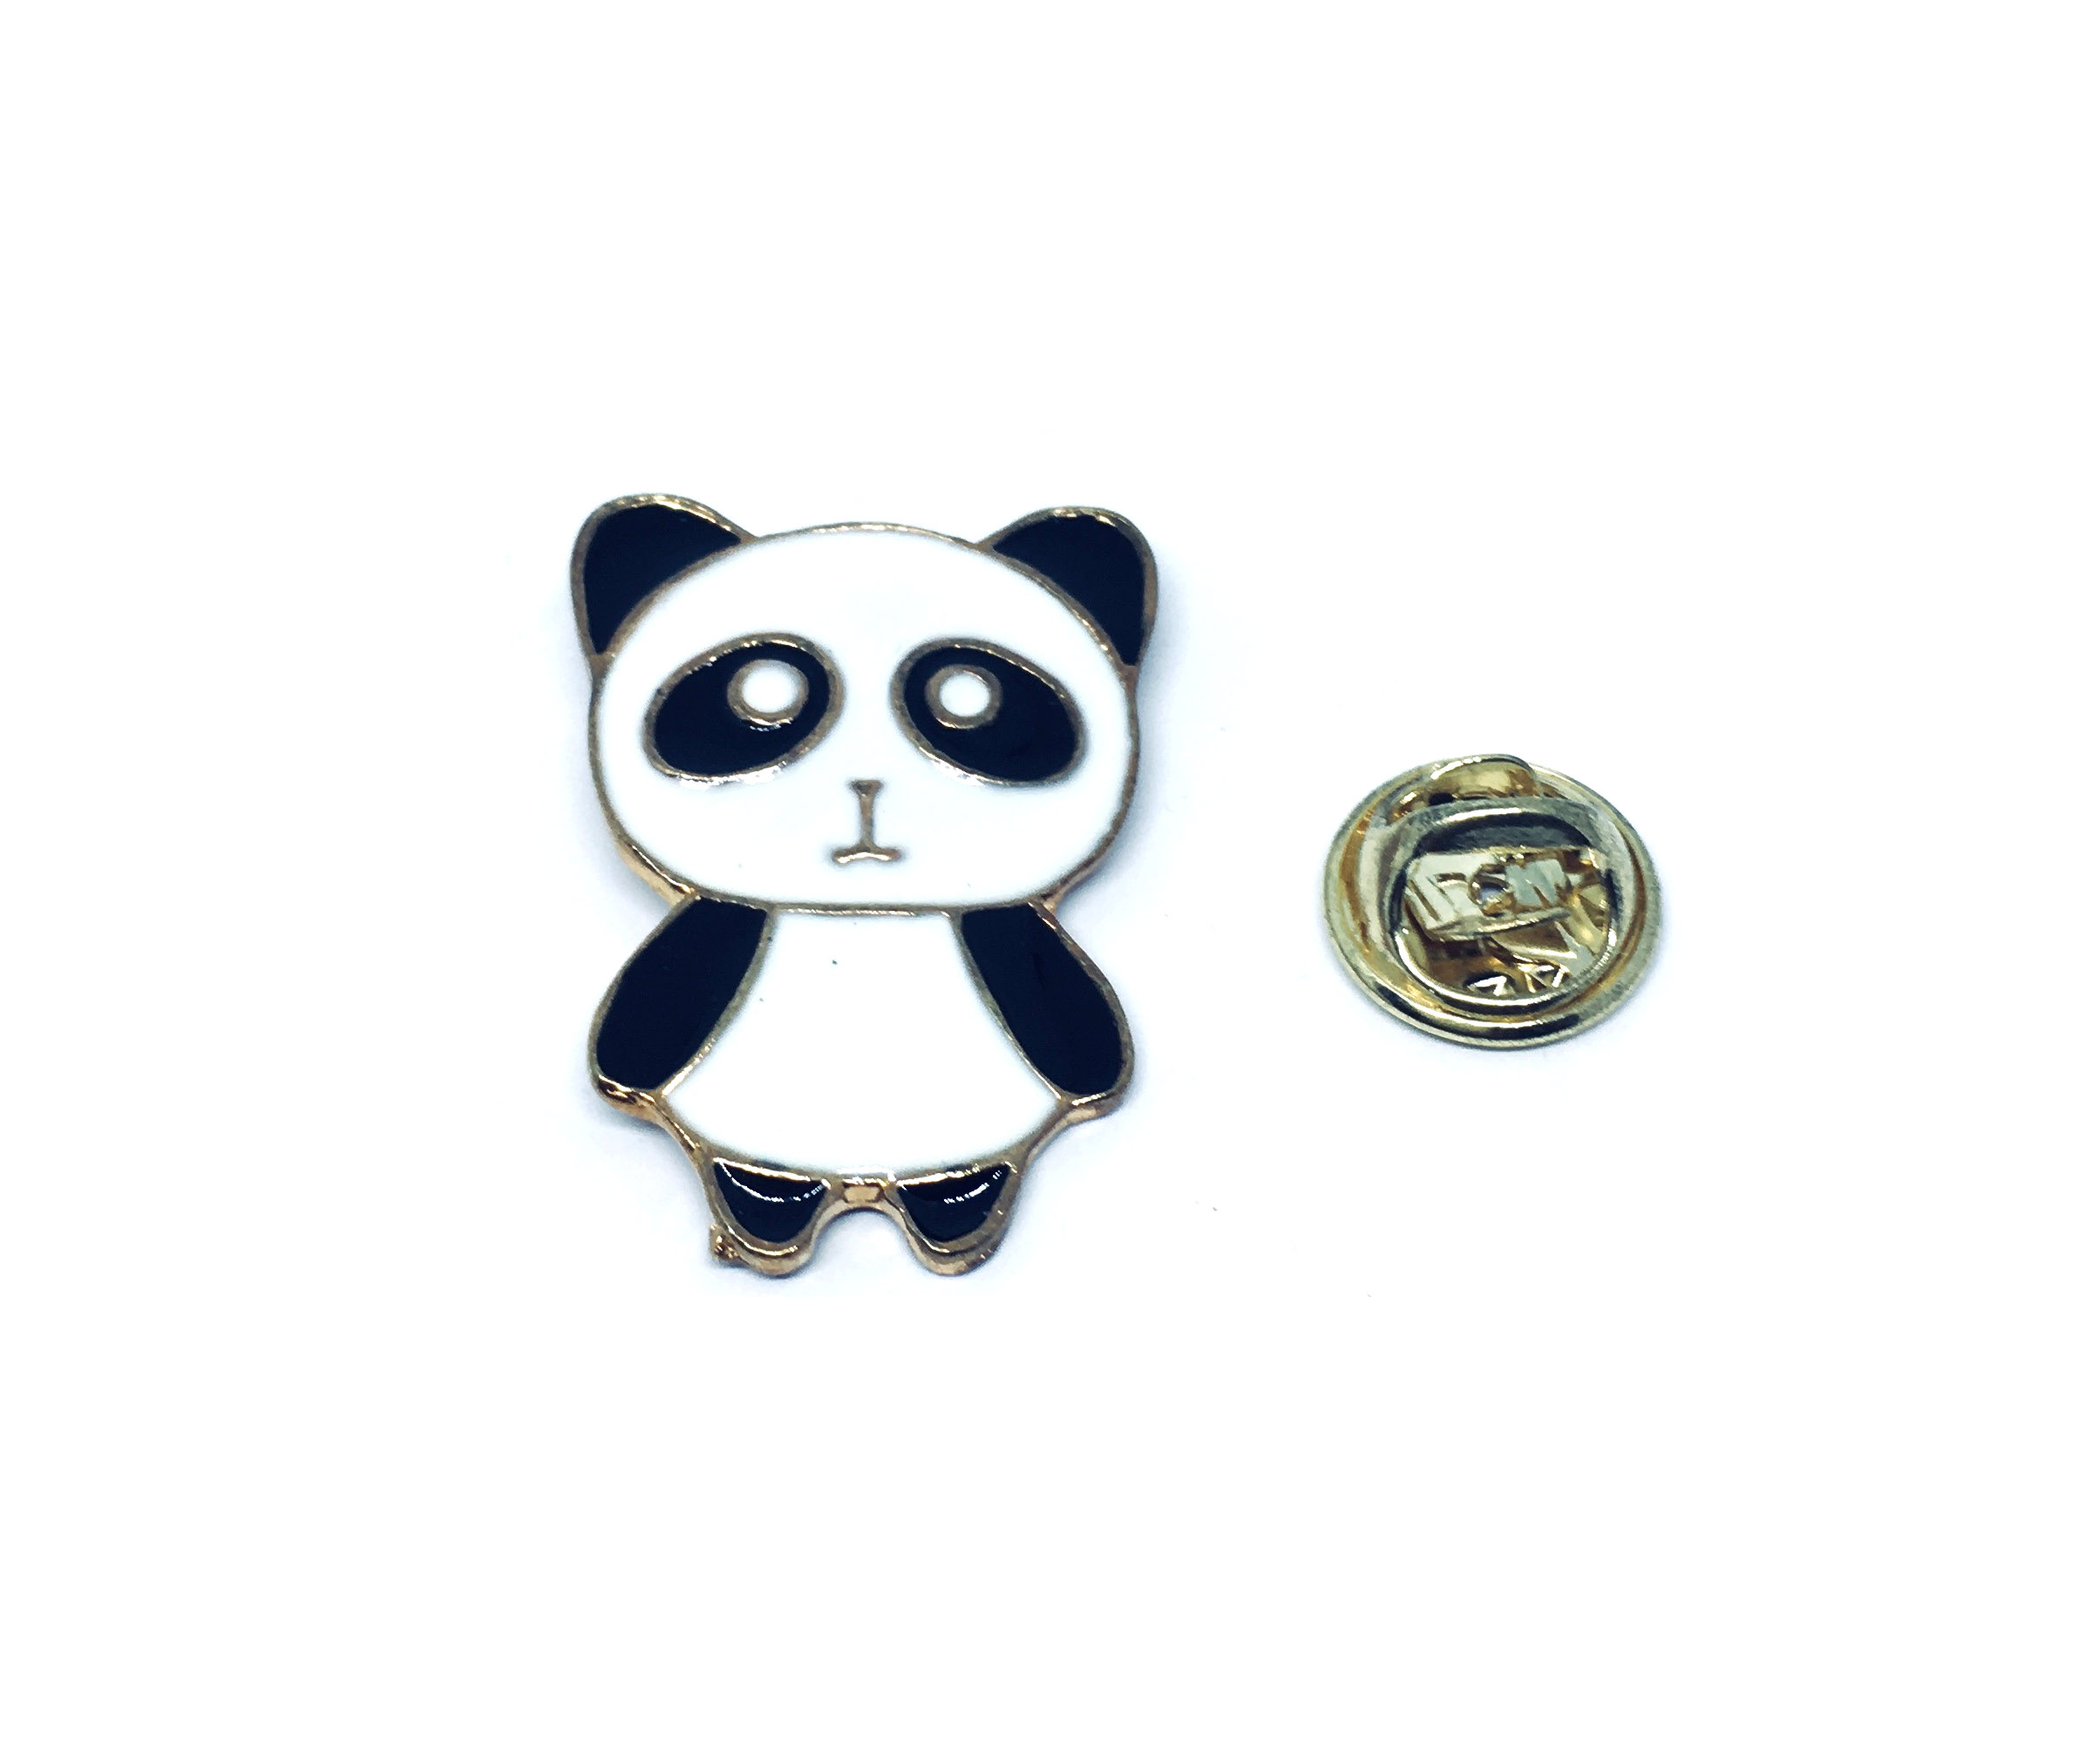 Panda Enamel Pin